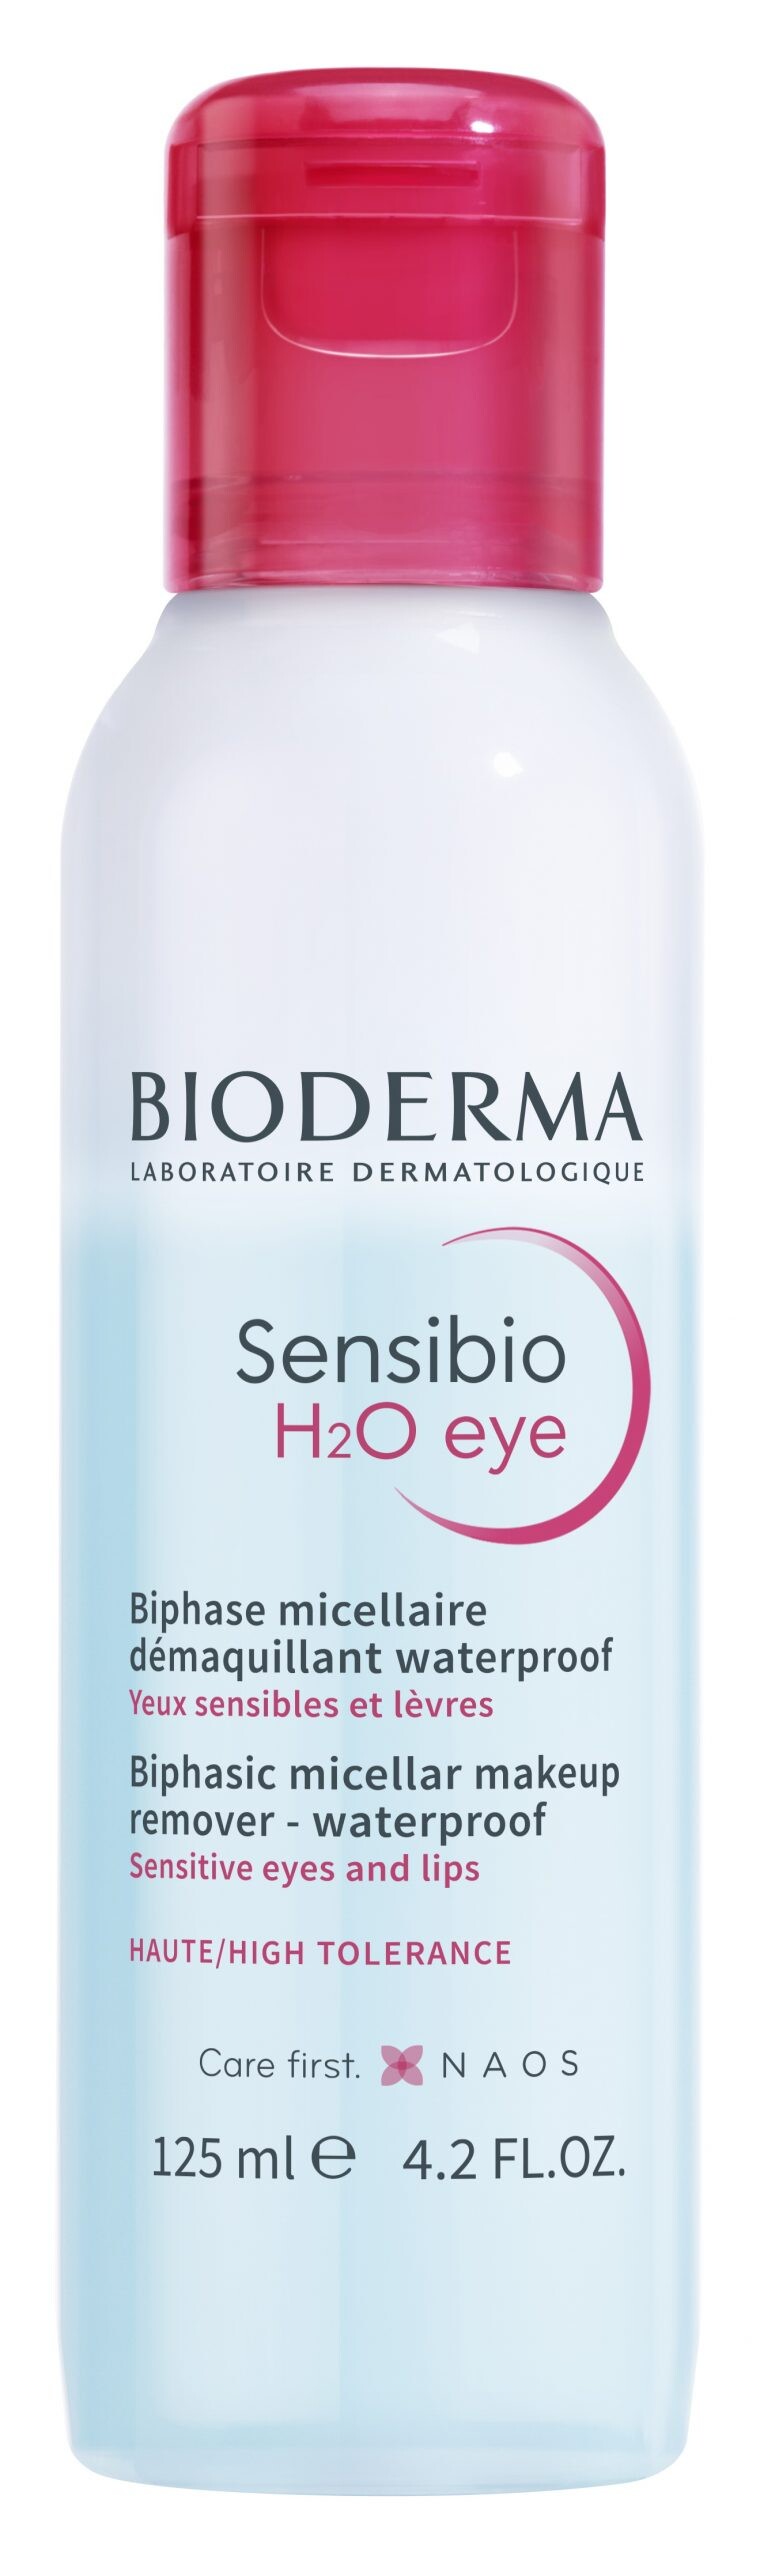 BIODERMA Sensibio H2O eye ใหม่! ผลิตภัณฑ์ทำความสะอาดผิวรอบดวงตาและริมฝีปาก ลบง่าย หมดจด ไม่แสบ พร้อมบำรุงขนตา เวชสำอางสำหรับผิวบอบบางแพ้ง่าย